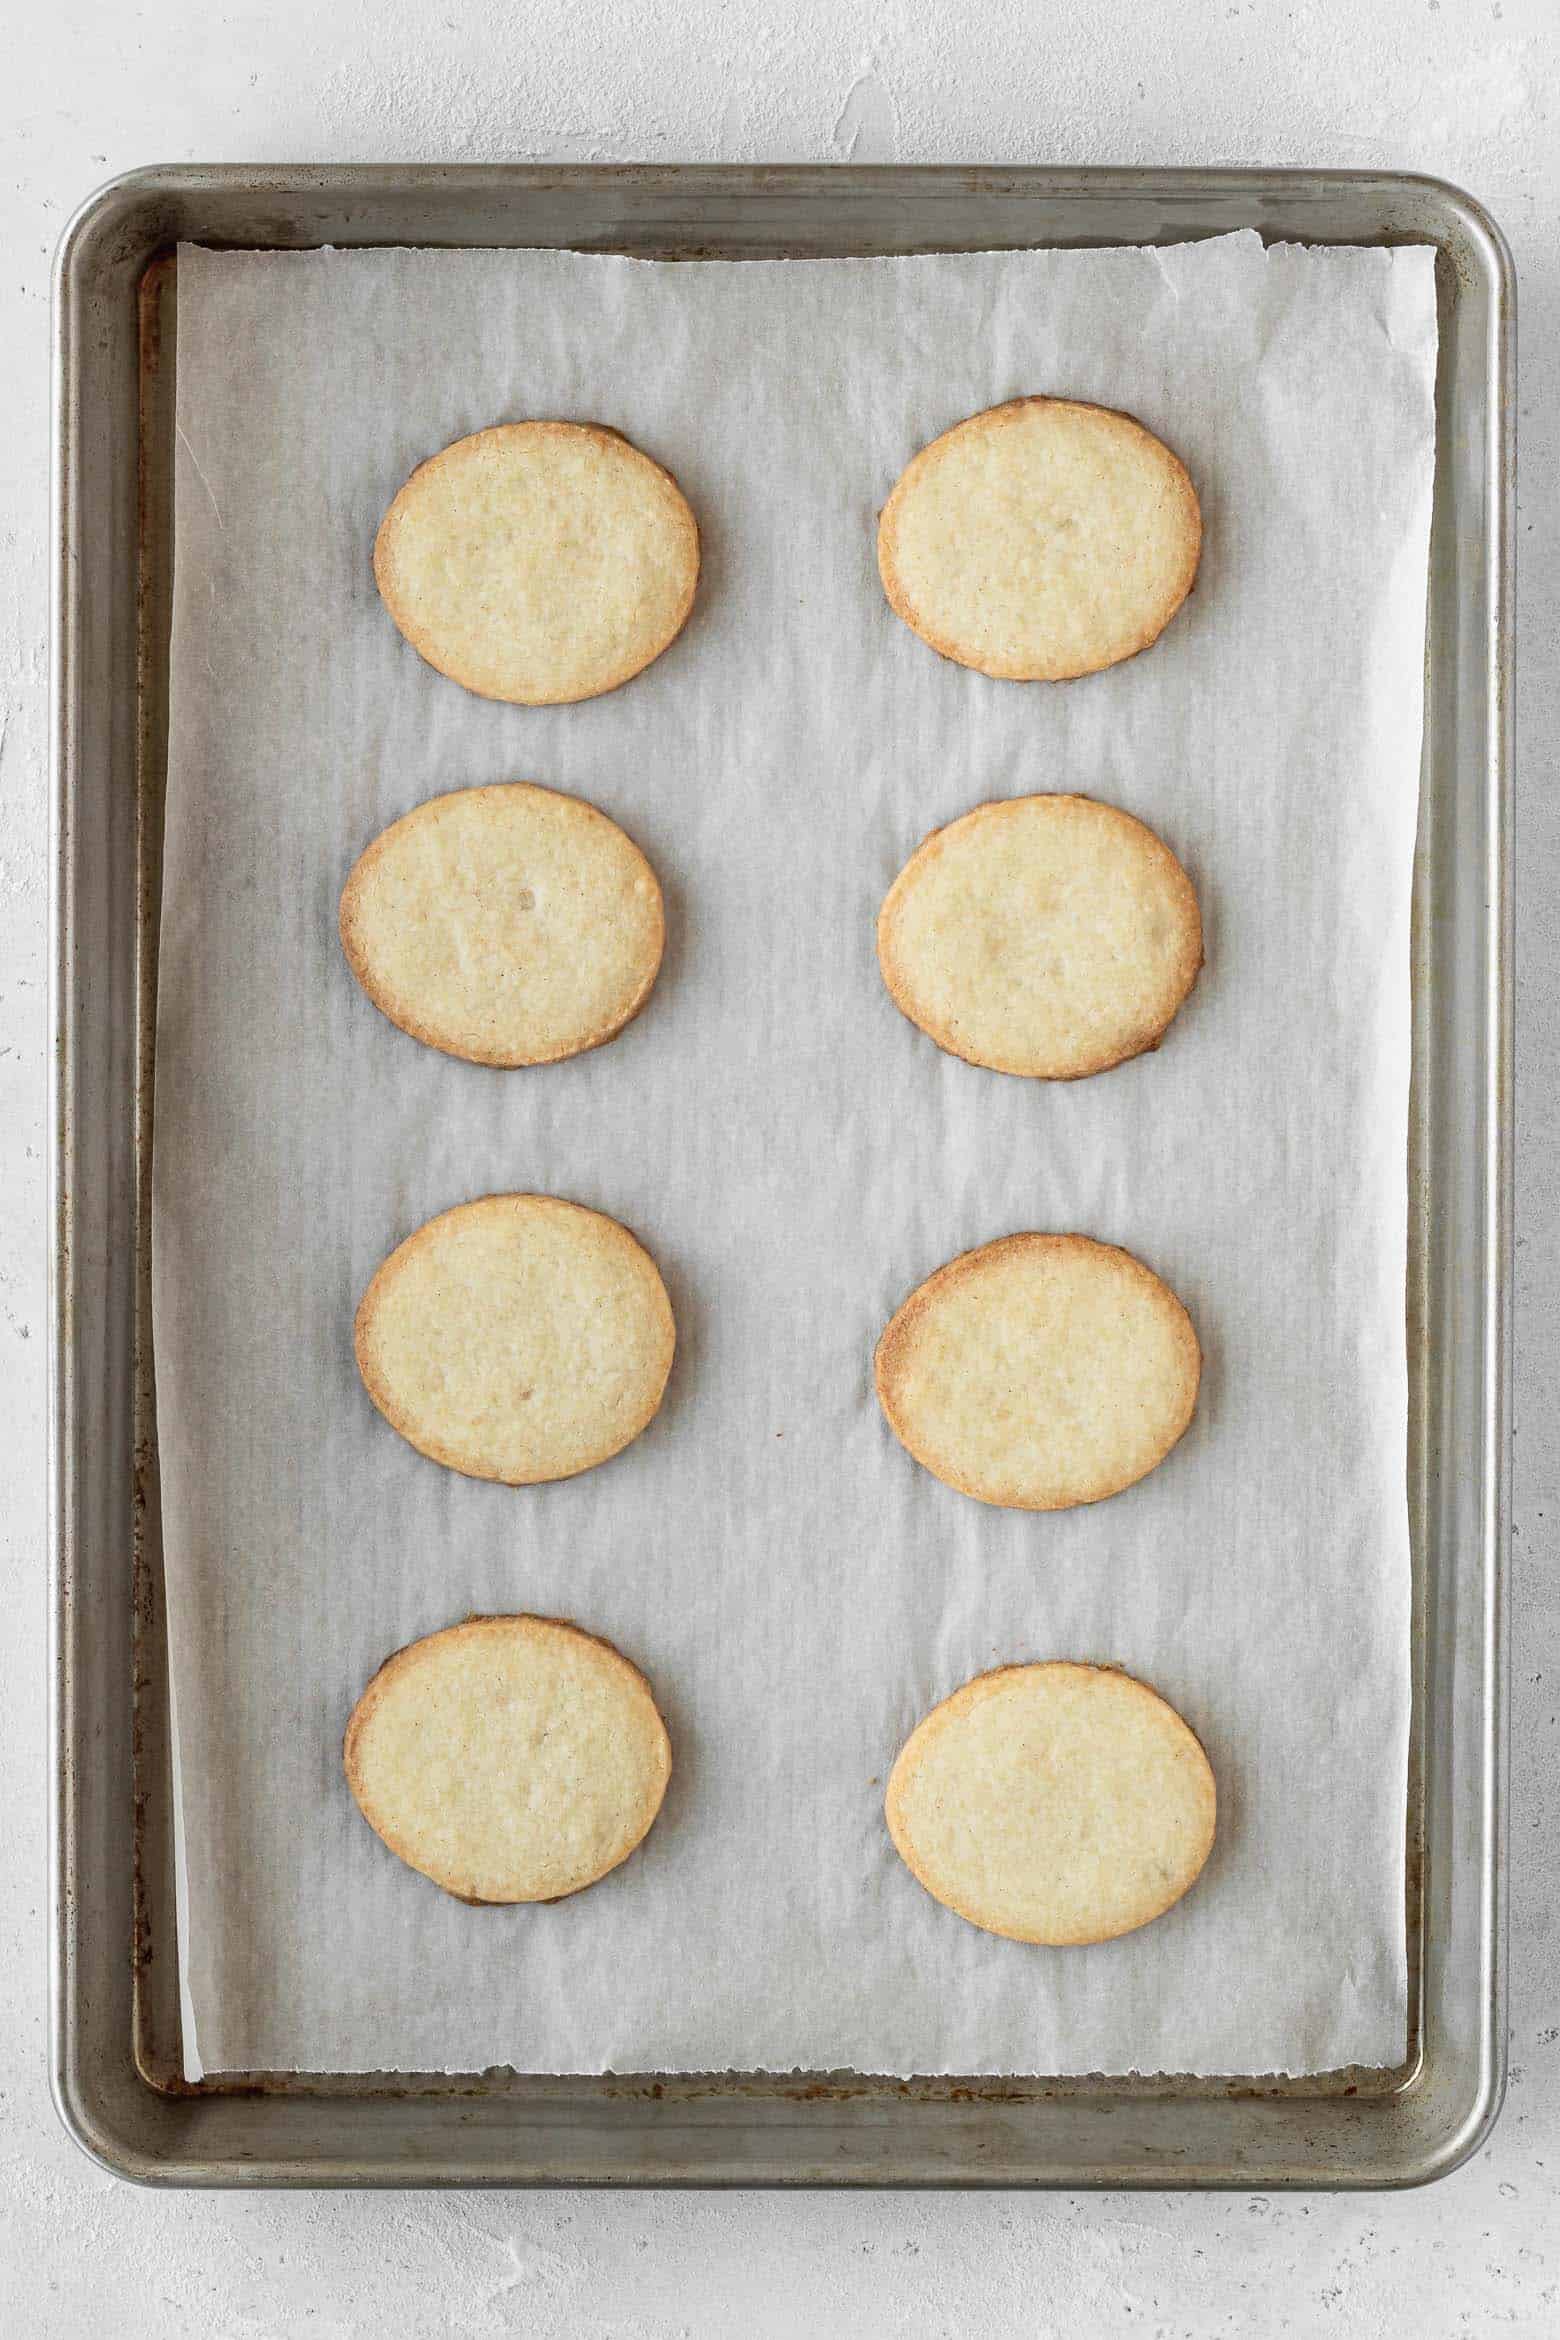 Baked sugar cookies on a baking sheet